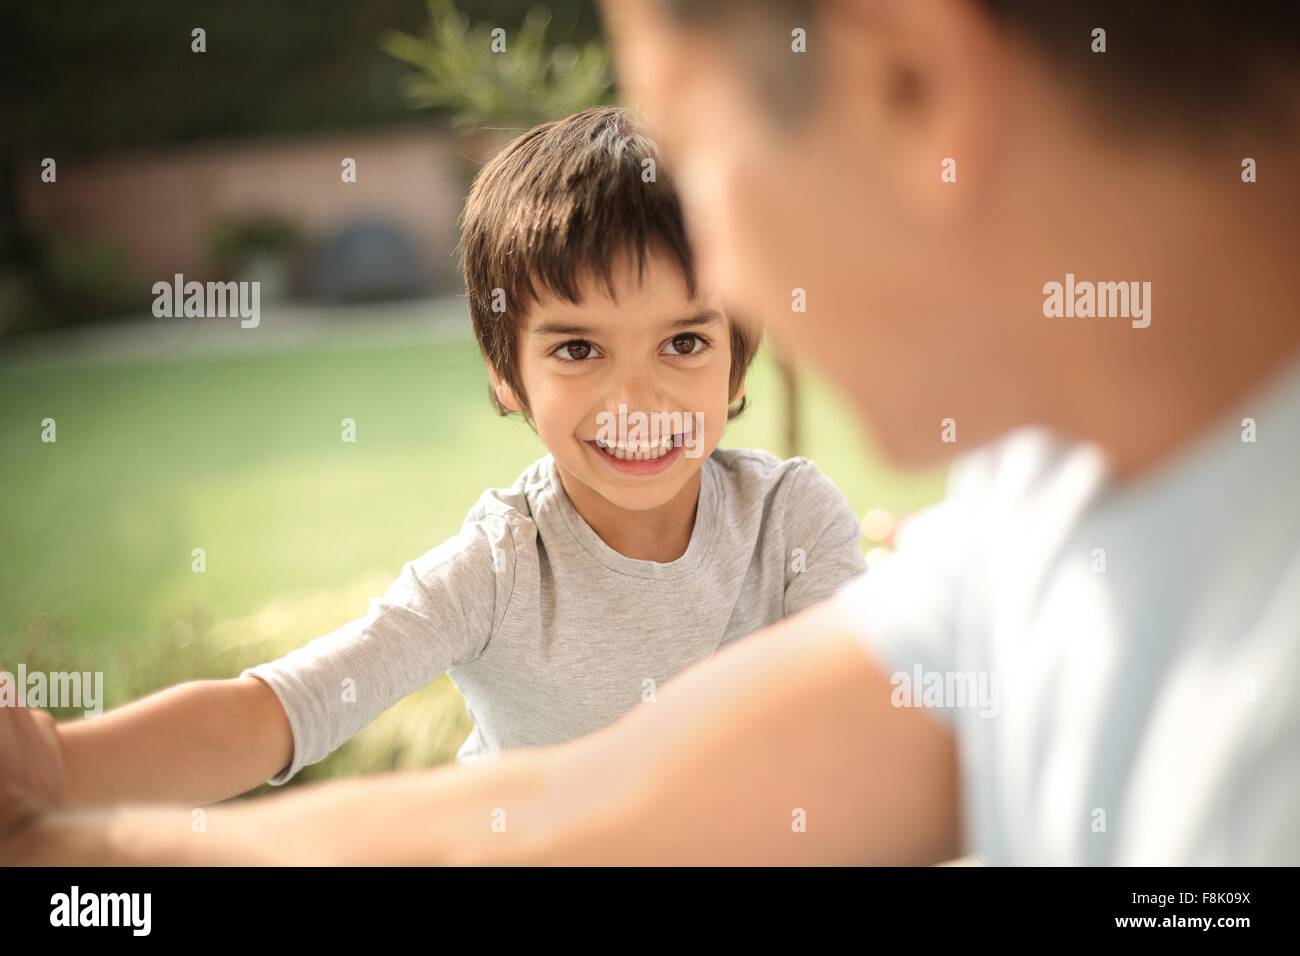 Boy in garden smiling at père, differential focus Banque D'Images